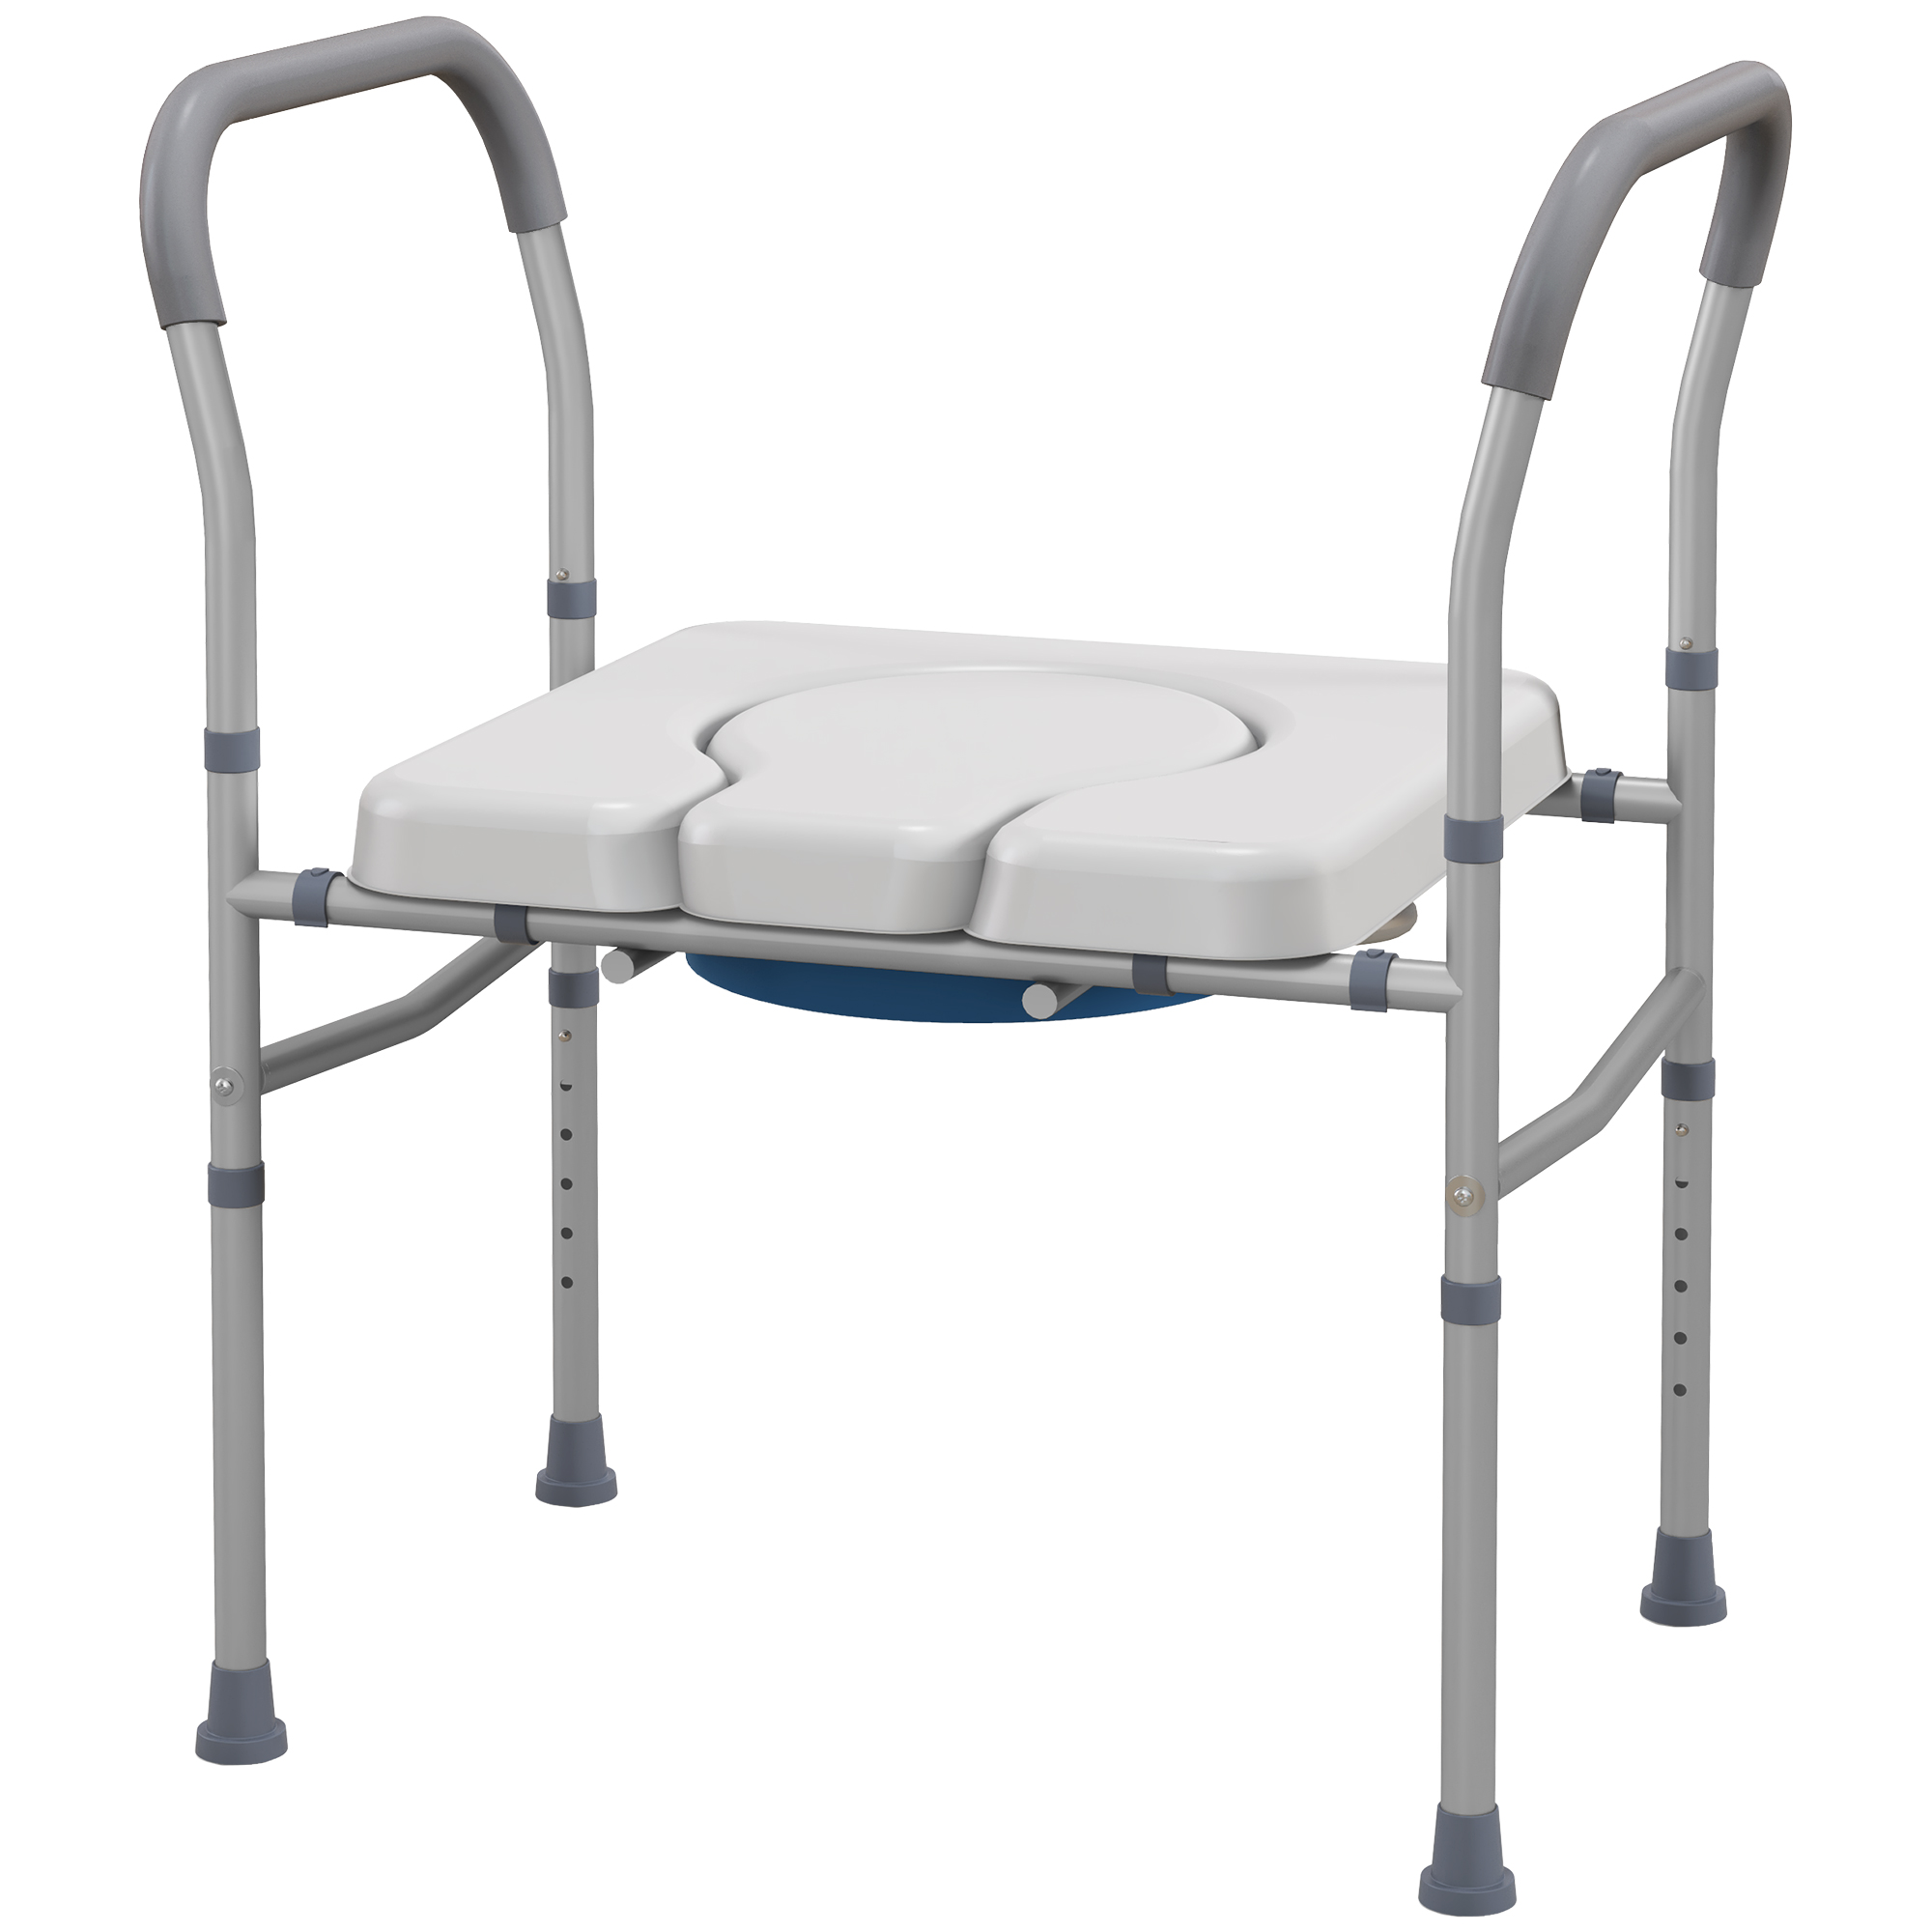 HOMCOM Άνετη καρέκλα τουαλέτας για ηλικιωμένους και άτομα με ειδικές ανάγκες 4 σε 1 ρυθμιζόμενο ύψος με υποβραχιόνια με επένδυση